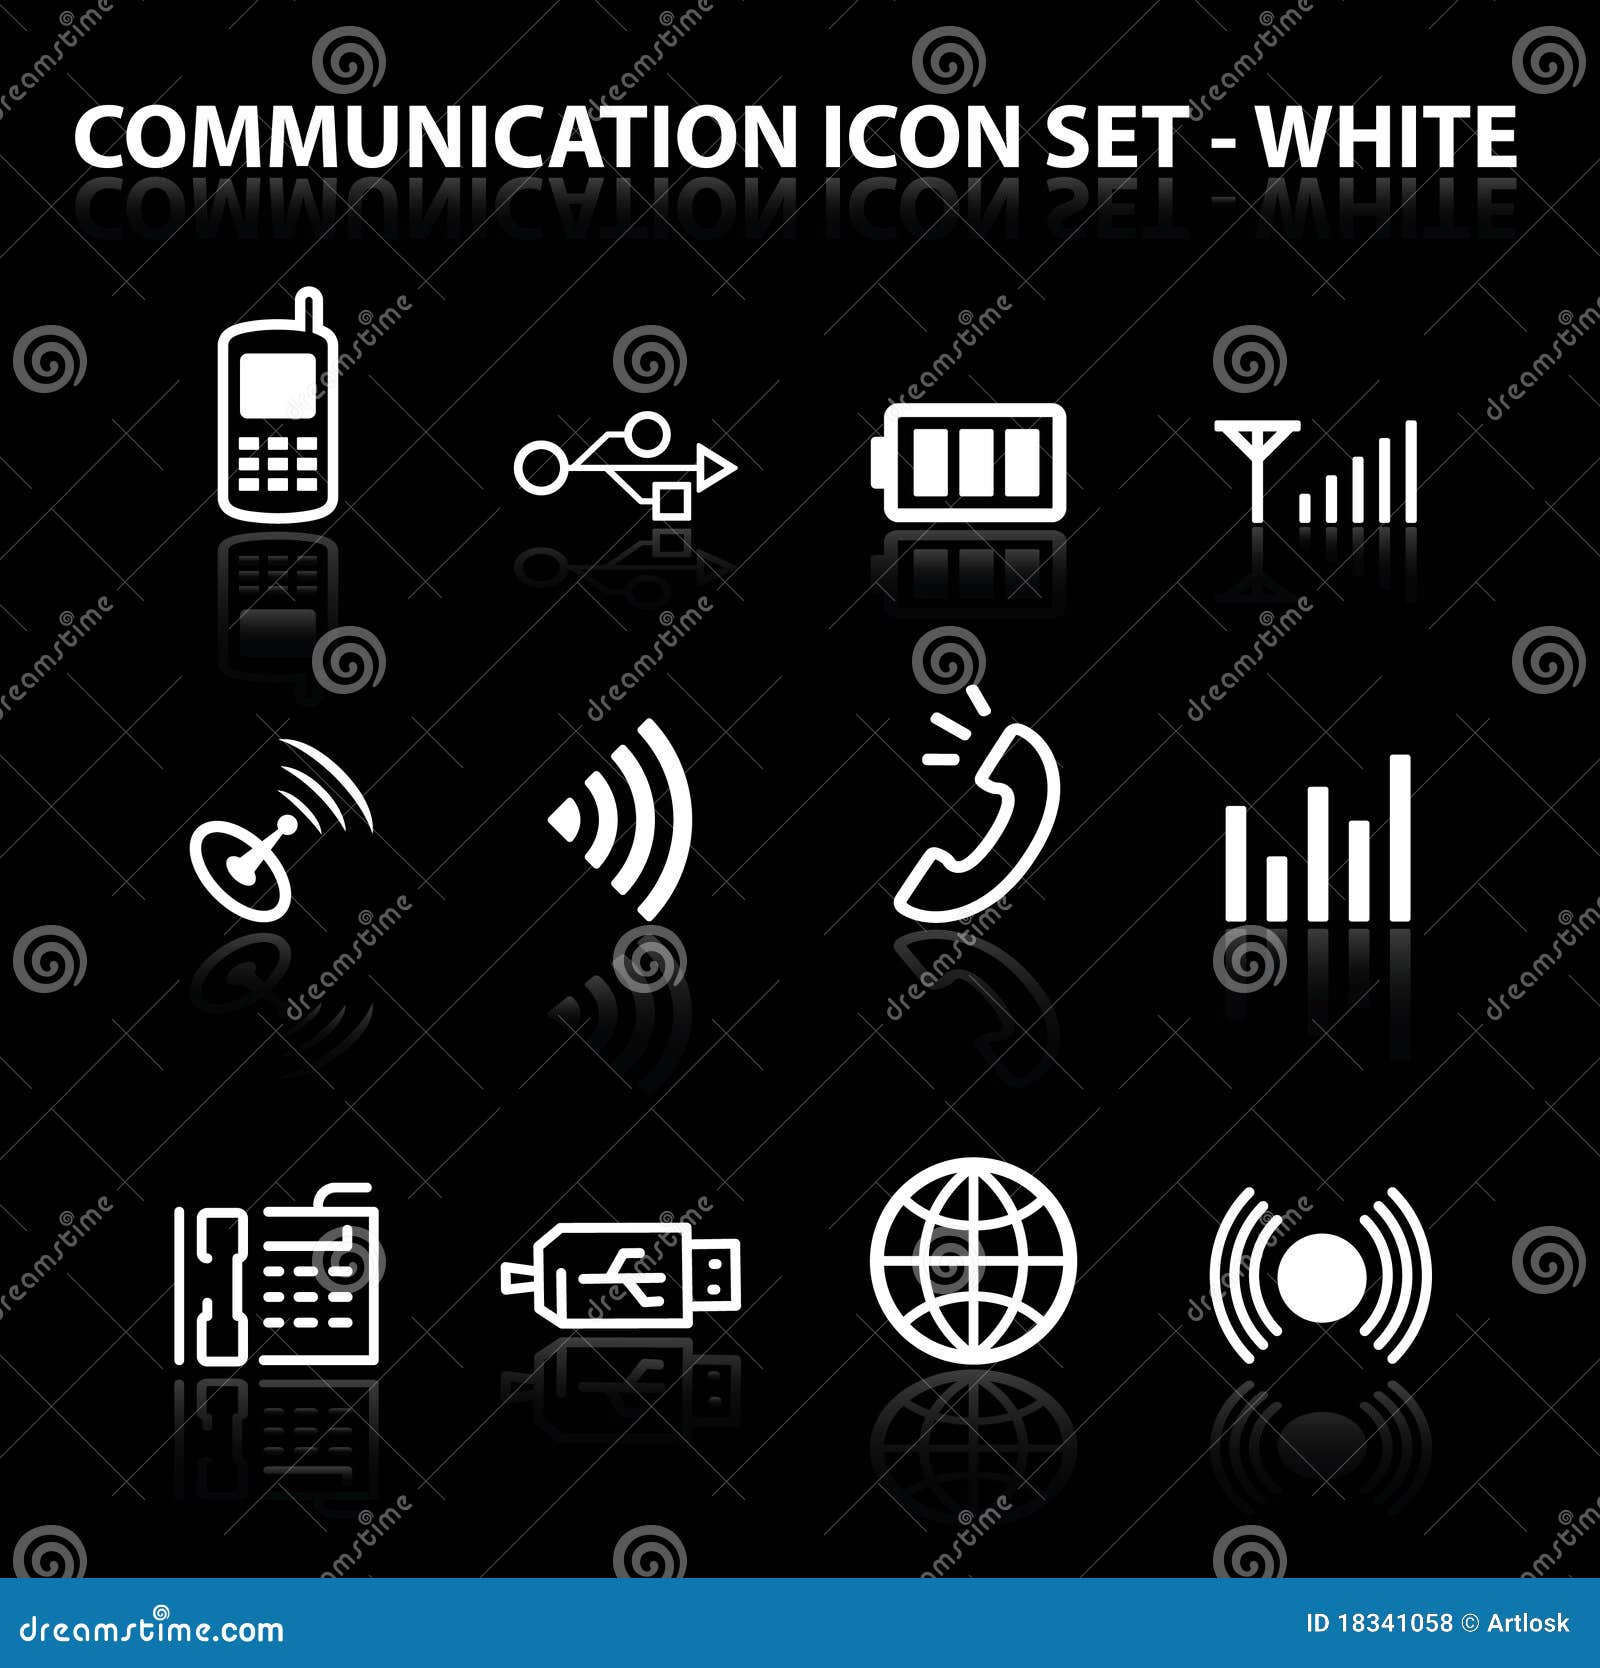 reflect communication icon set